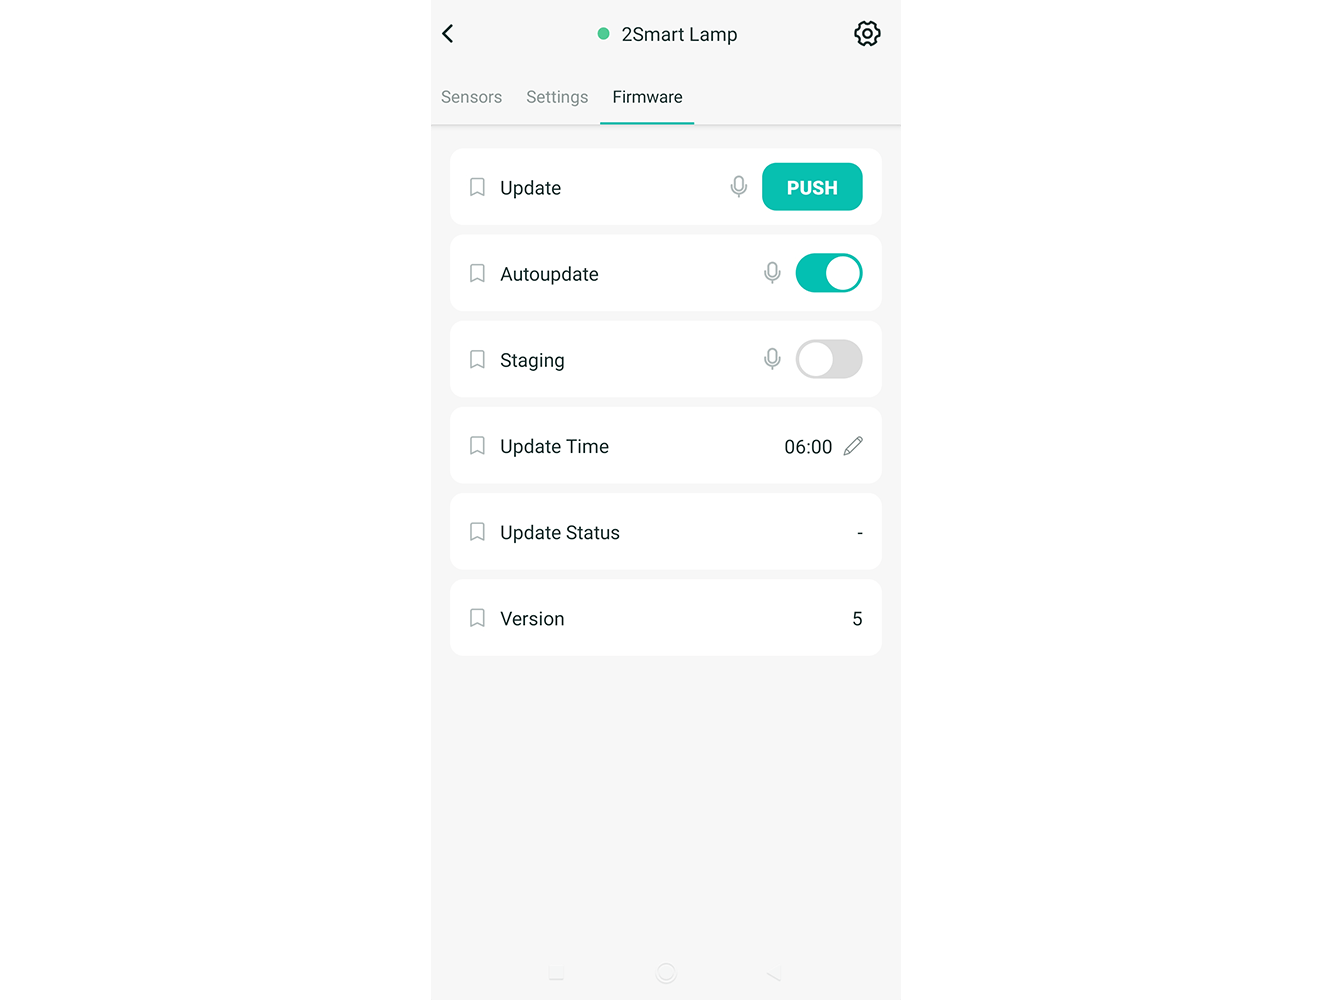 Firmware update settings